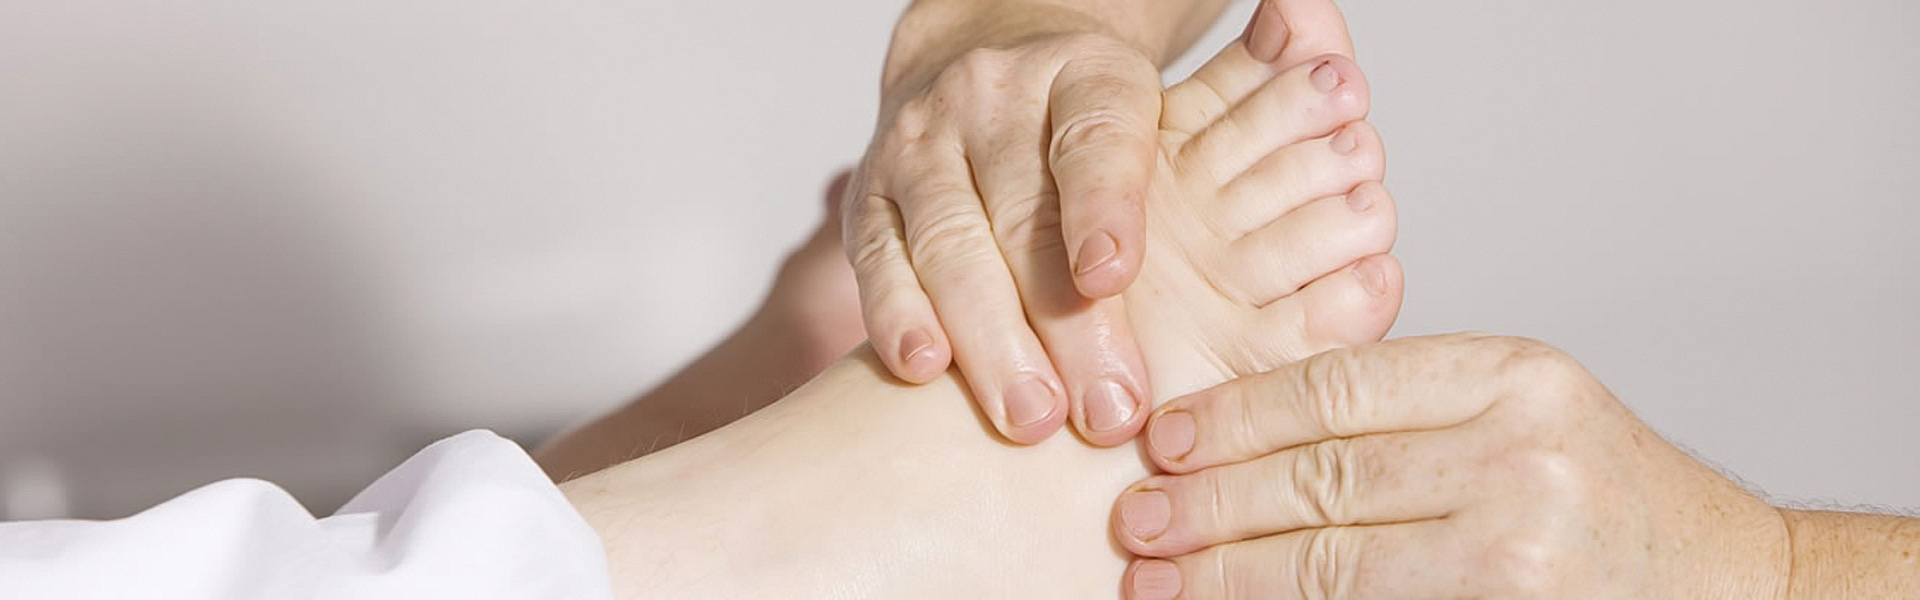 Foot massage | Reflexology at Holmwood Clinic